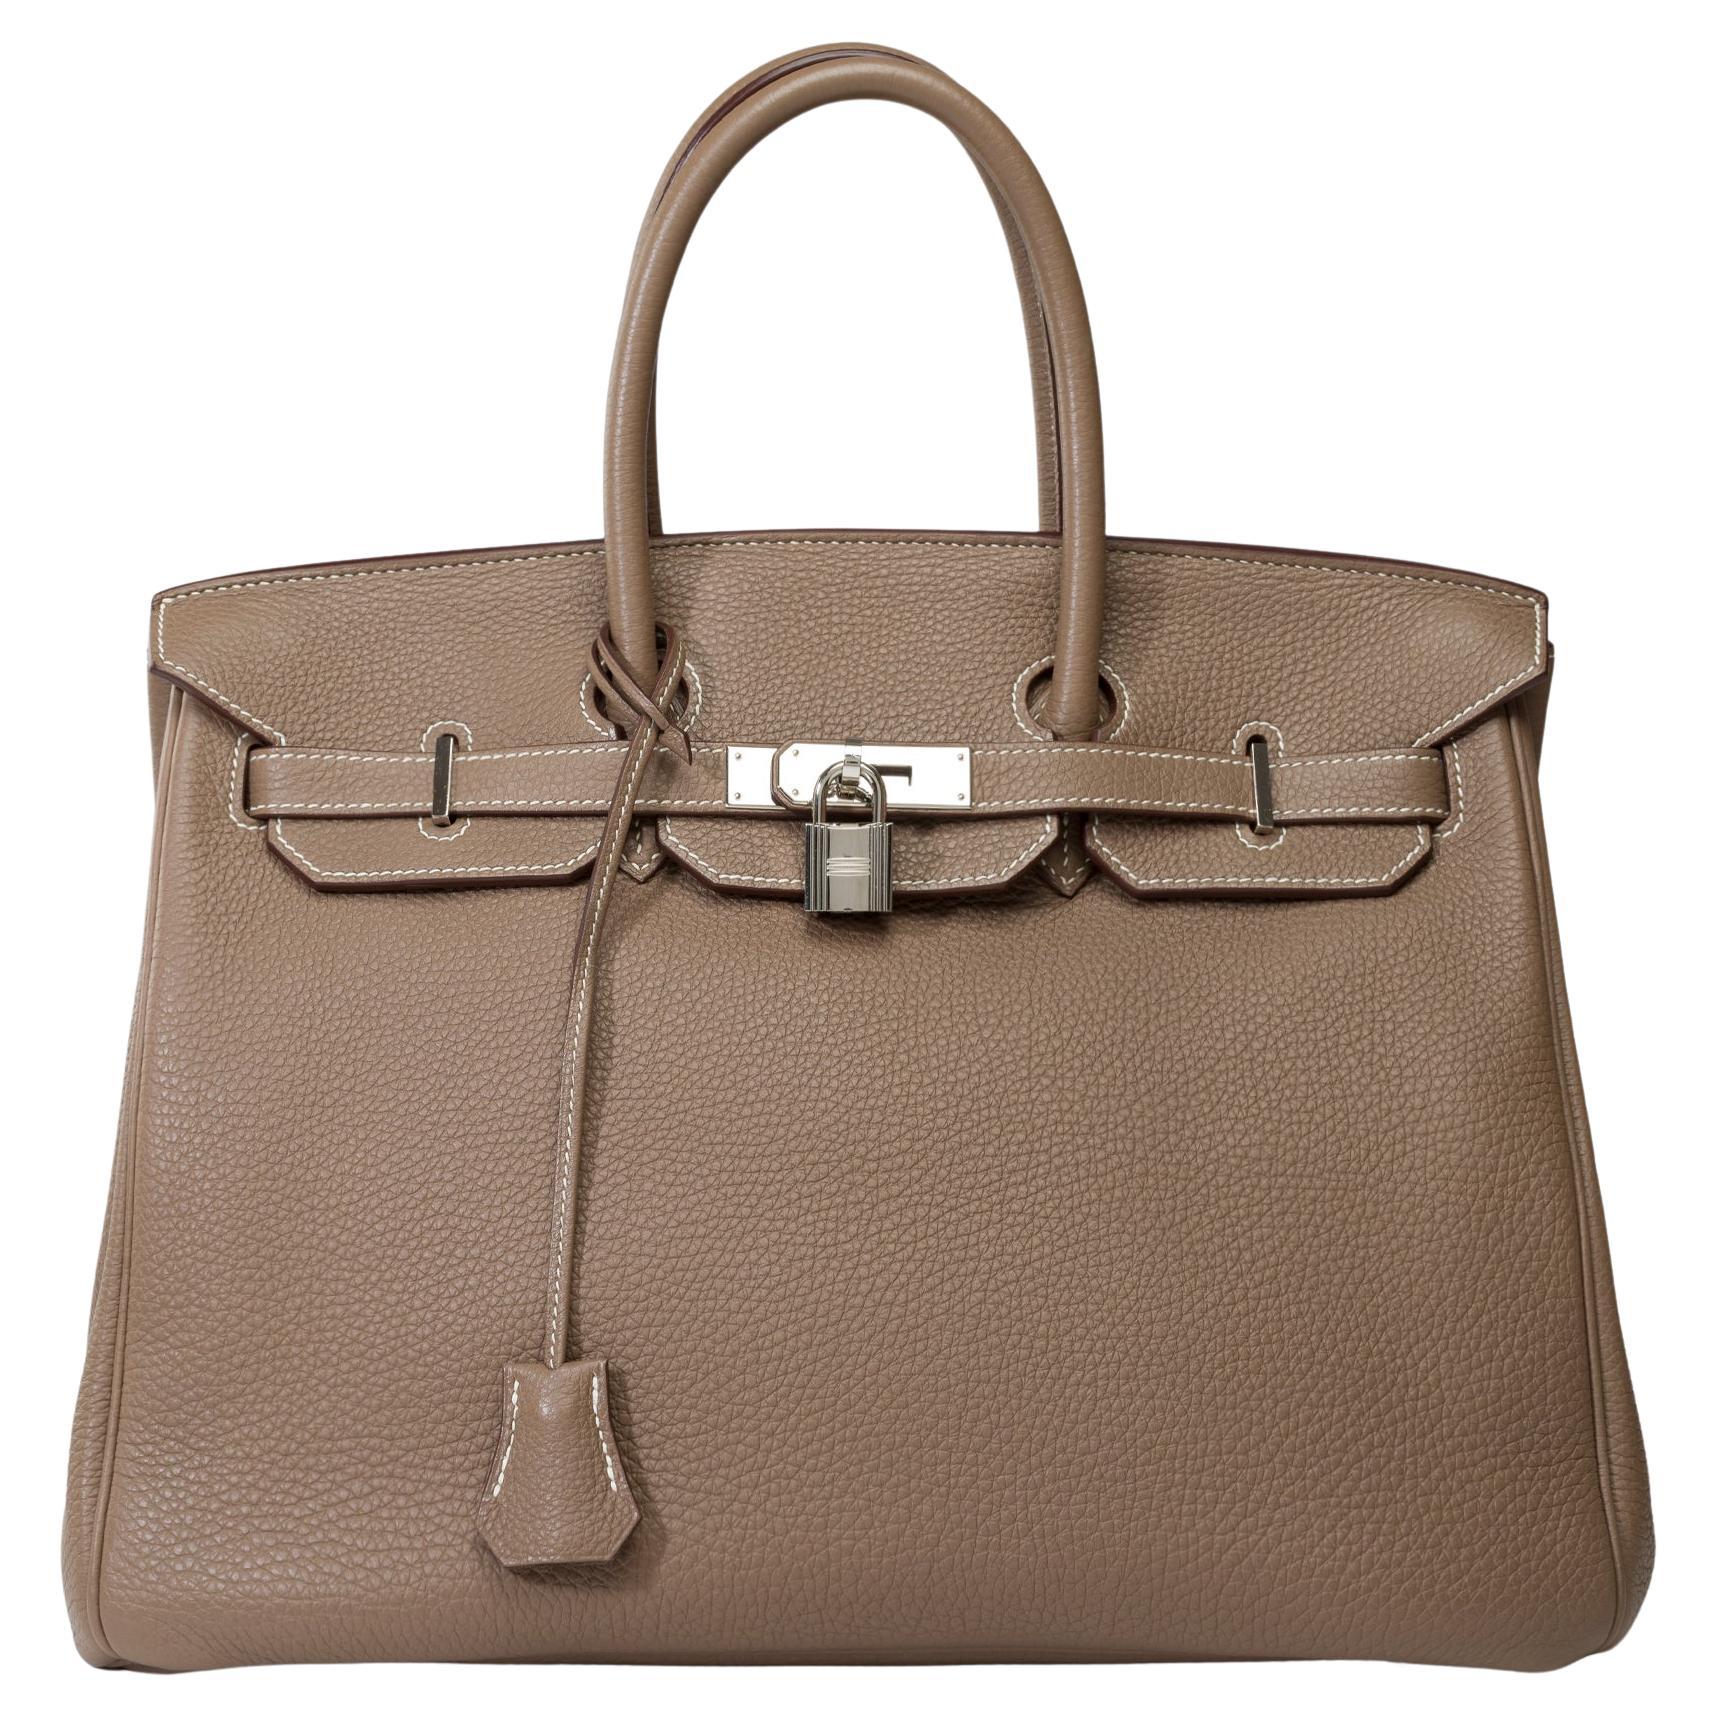 Stunning Hermès Birkin 35 handbag in etoupe Togo leather, SHW